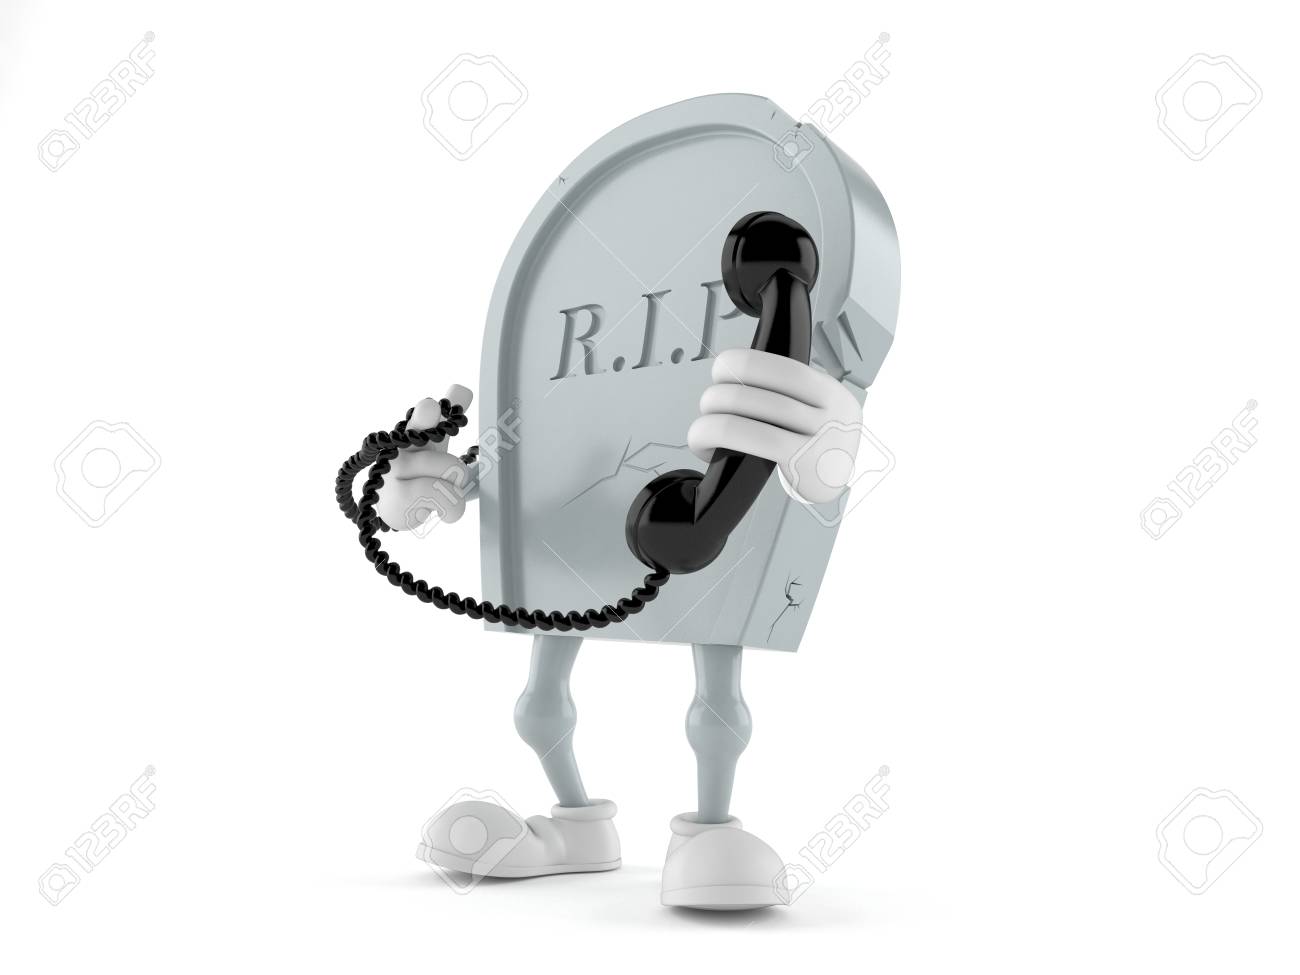 103193329-grave-character-holding-a-telephone-handset-isolated-on-white-background-3d-illustration.jpg